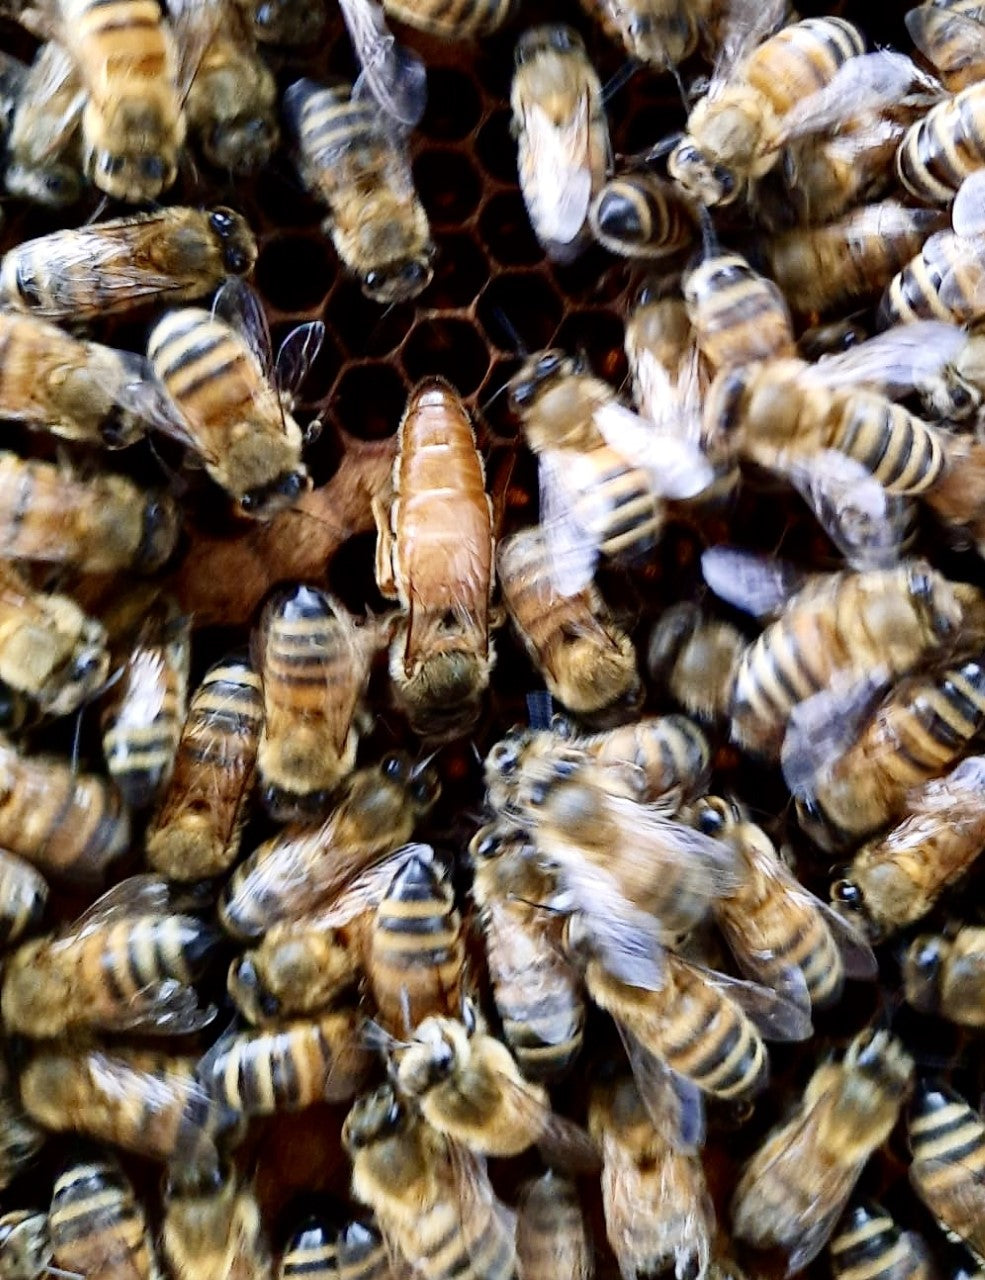 Queen Bees For Sale In Essex | Happy Bees - Local Essex Honey